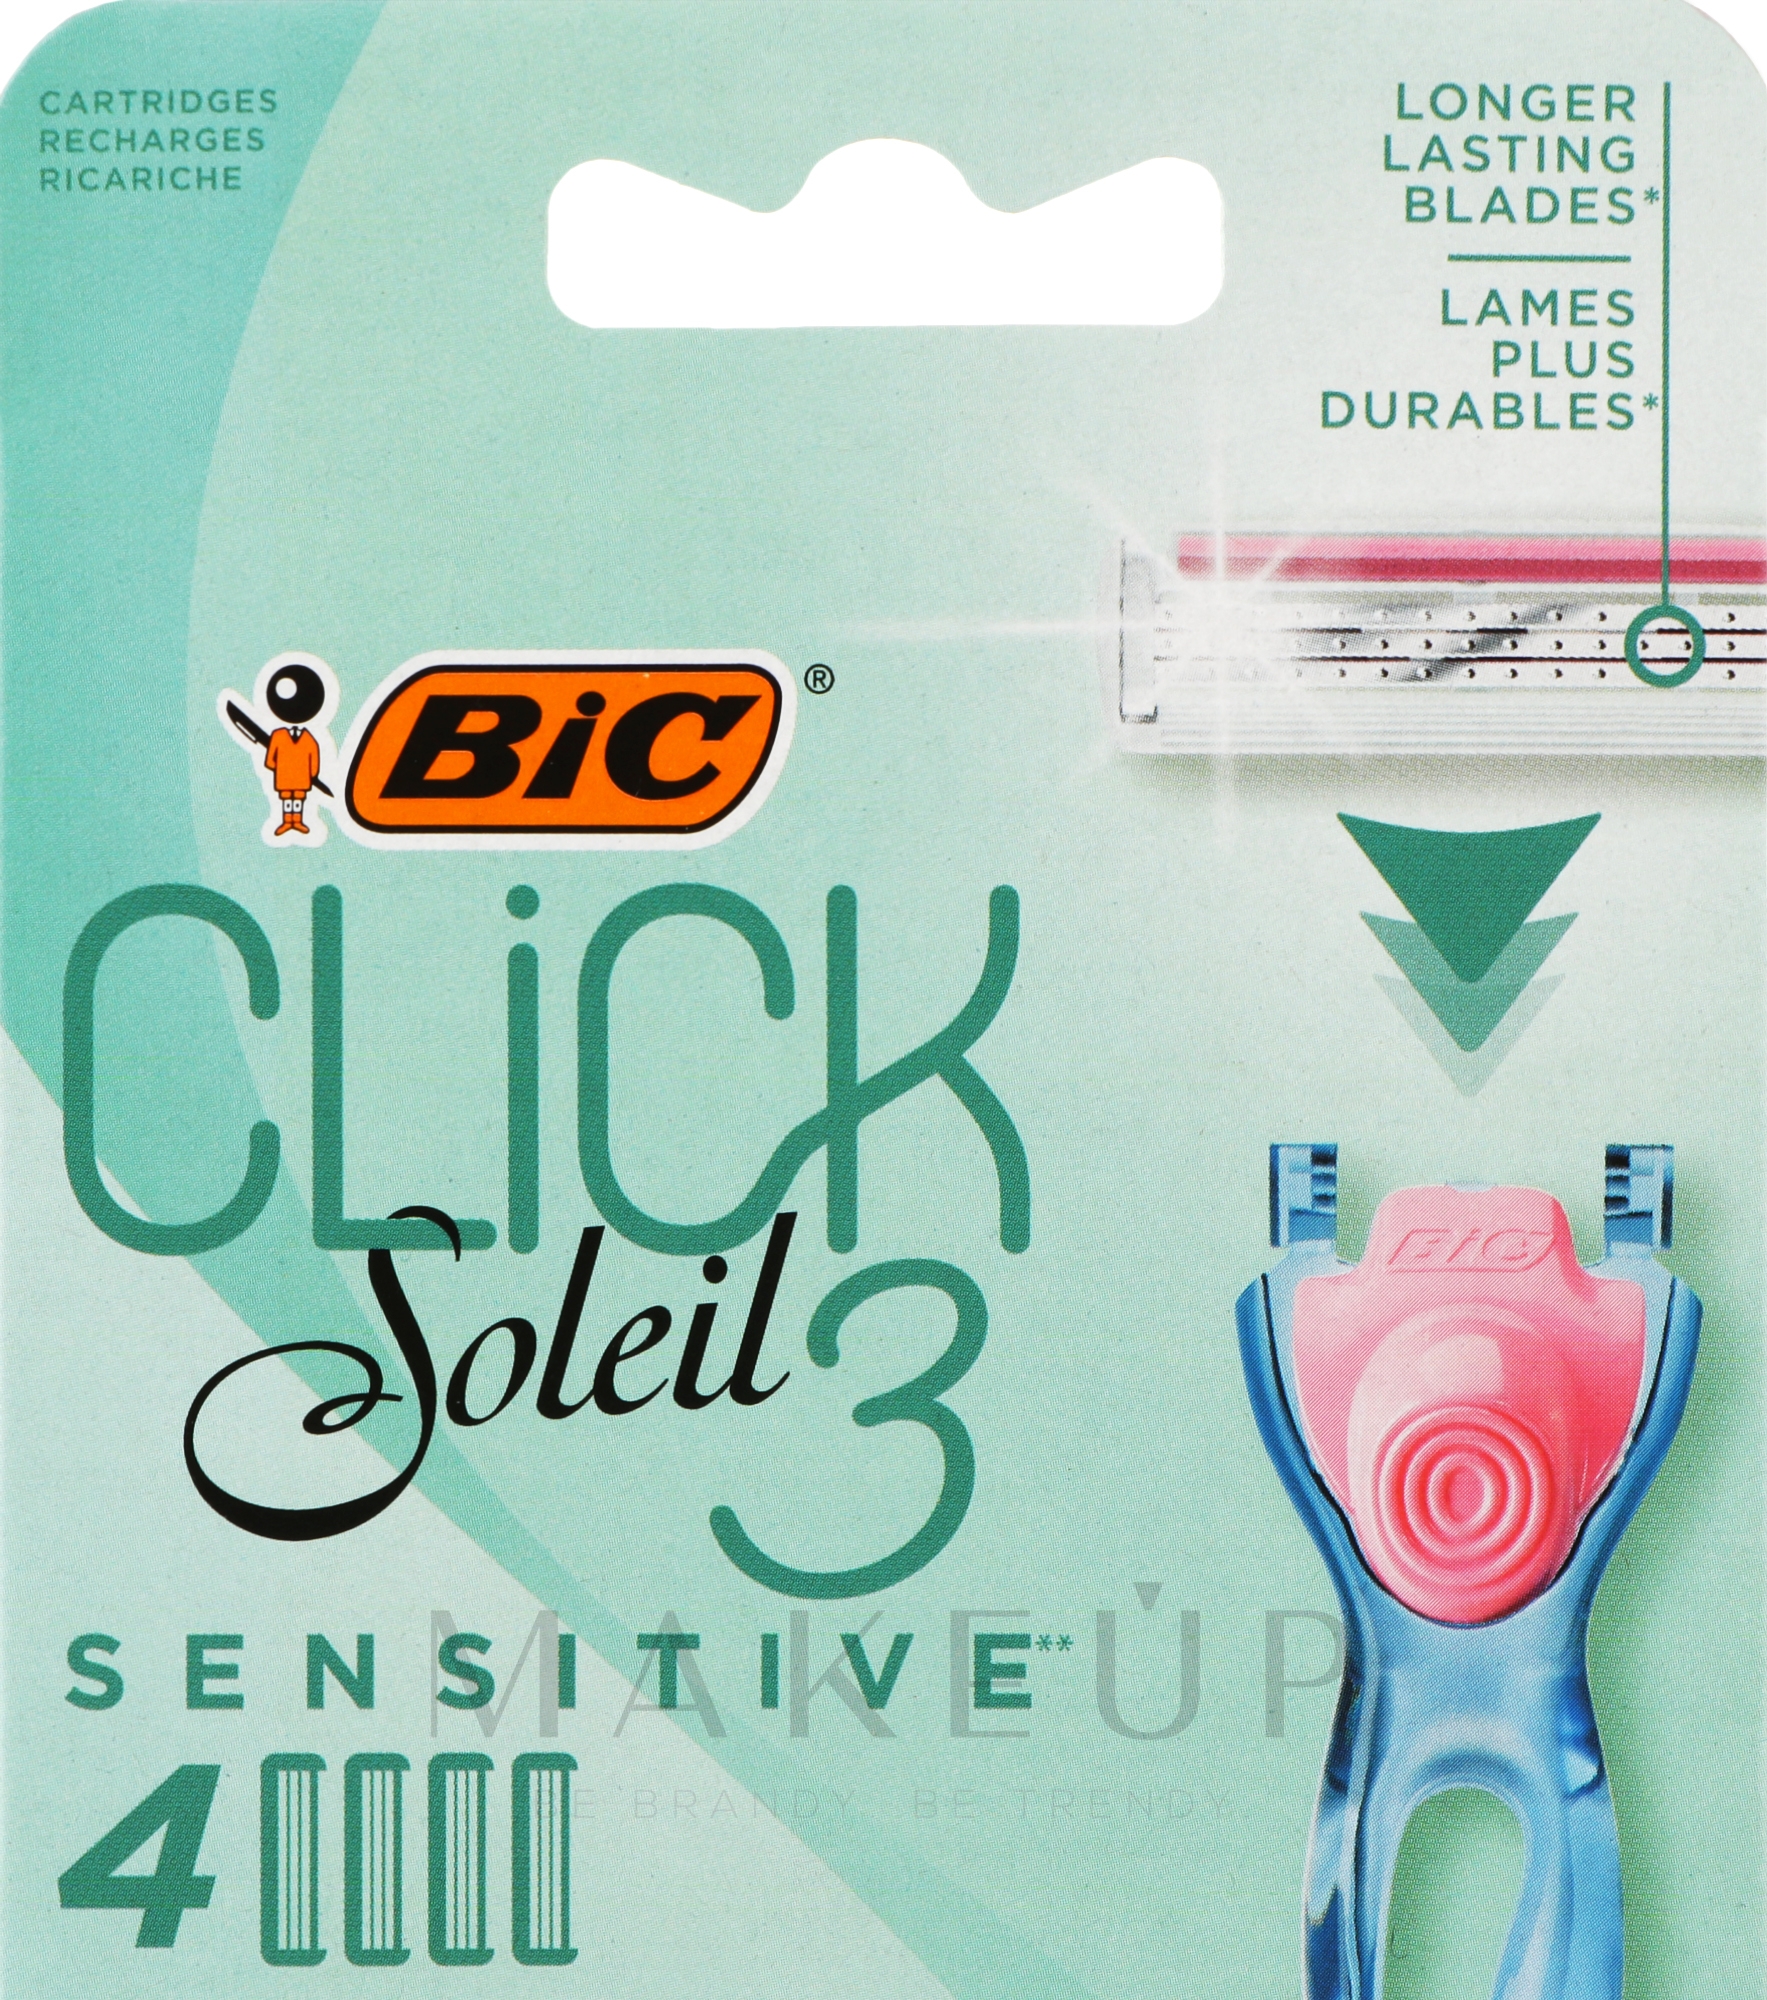 Ersatzklingen 4 St. - Bic Click 3 Soleil Sensitive — Bild 4 St.